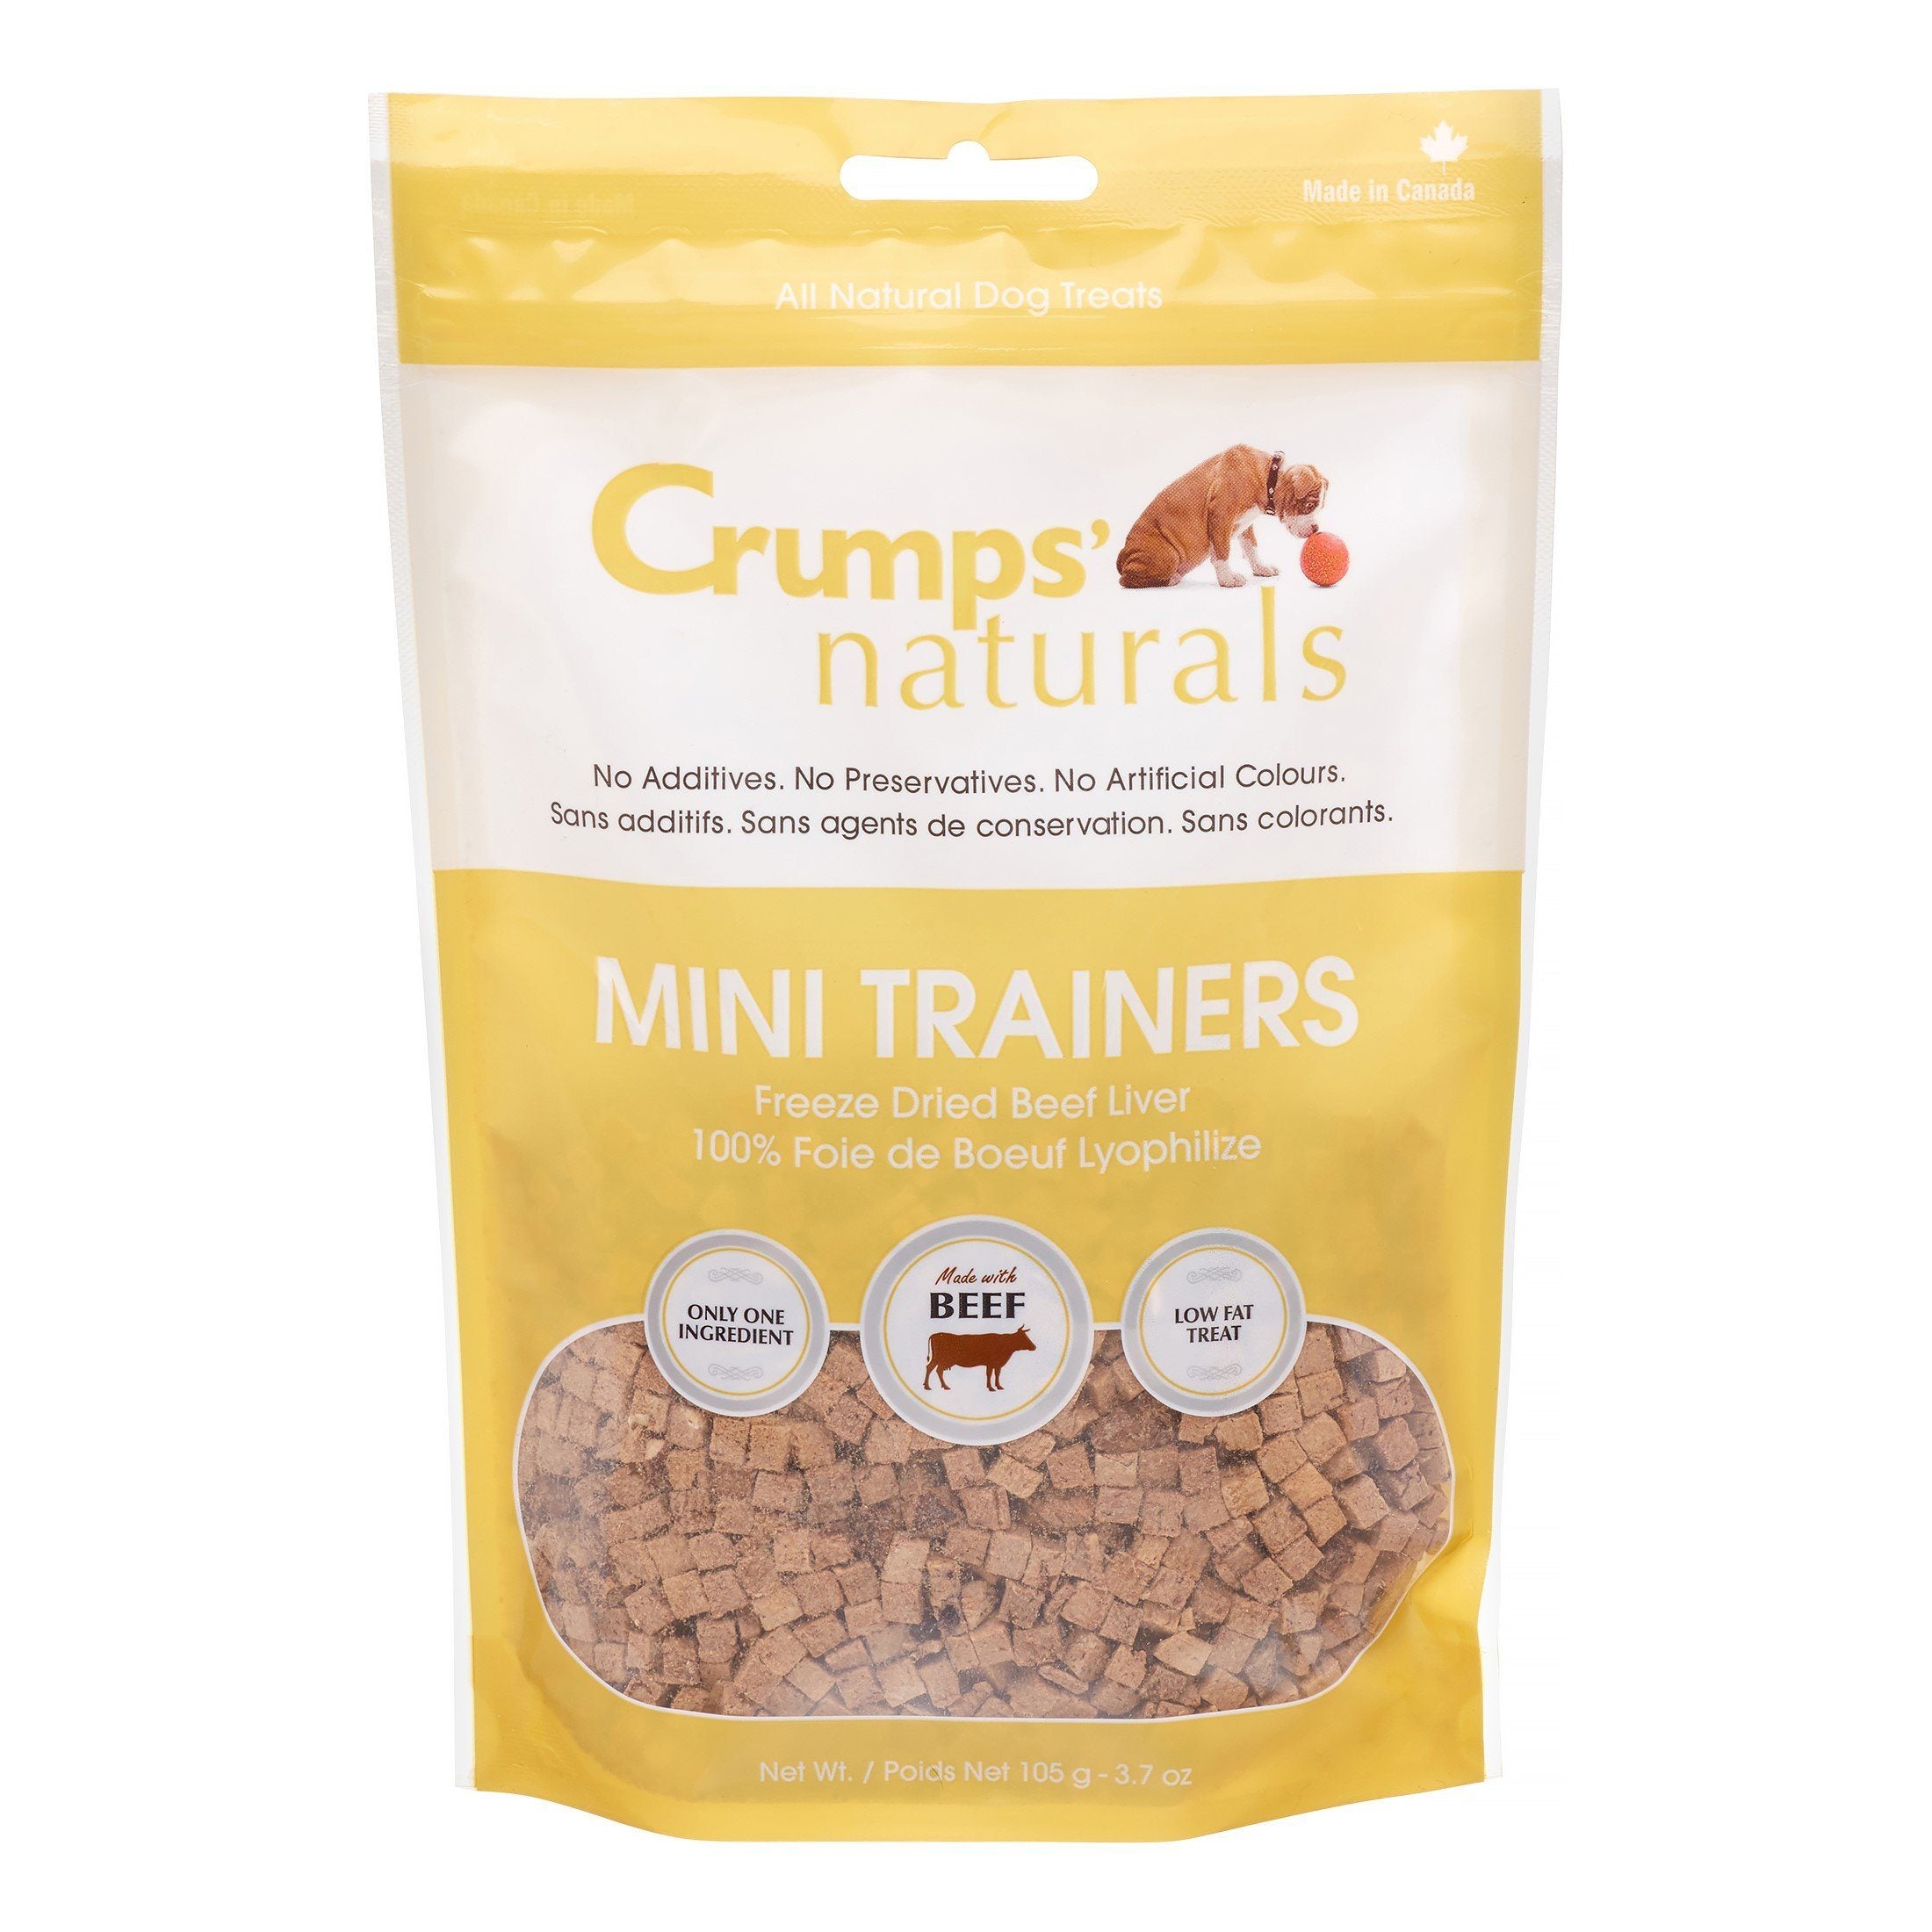 Crumps' Naturals Mini Trainers Freeze-Dried Beef Liver Freeze-Dried Dog Treats - 3.7 oz Bag  